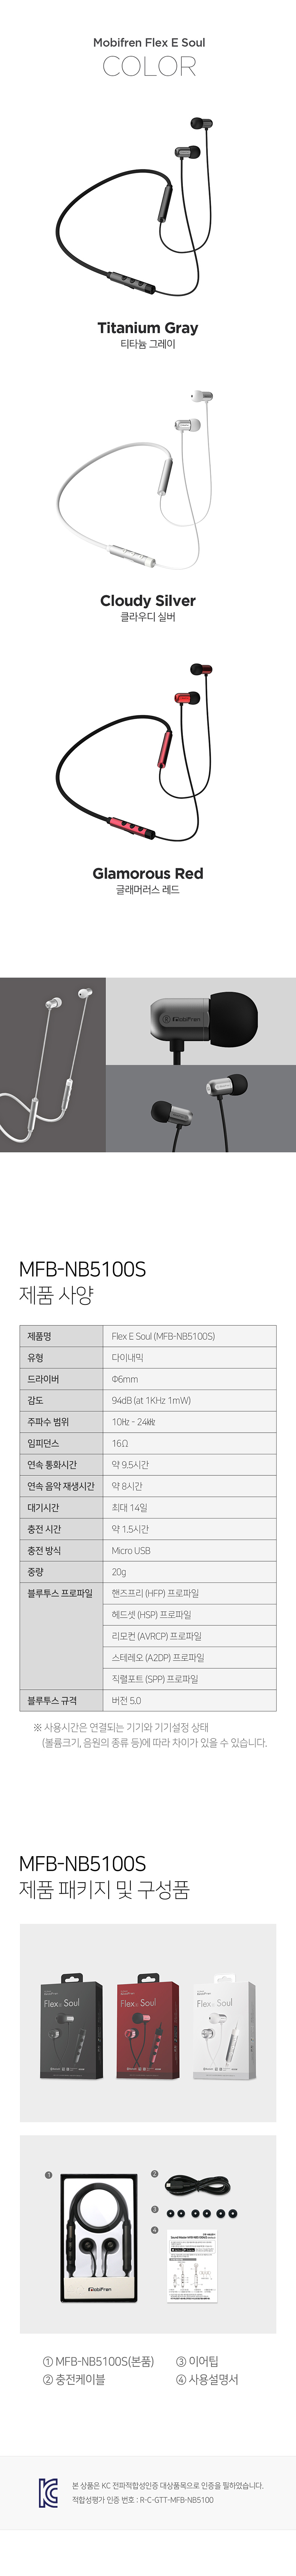 MFB-NB5100S_info_s_790.jpg